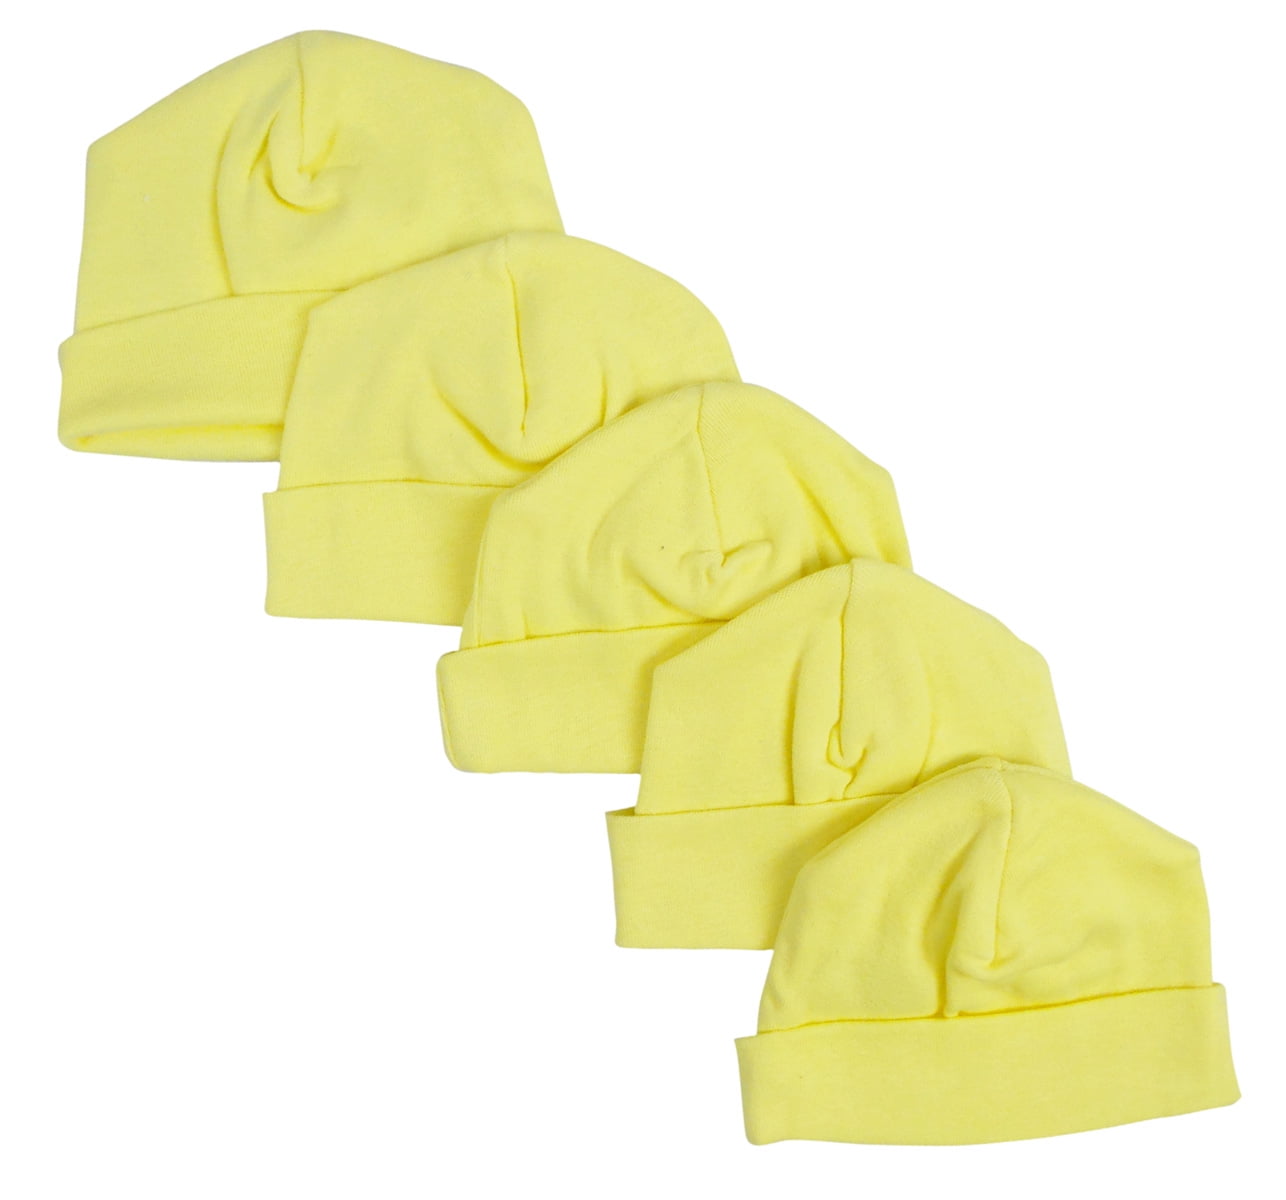 Baby Cap, Yellow - Pack Of 5